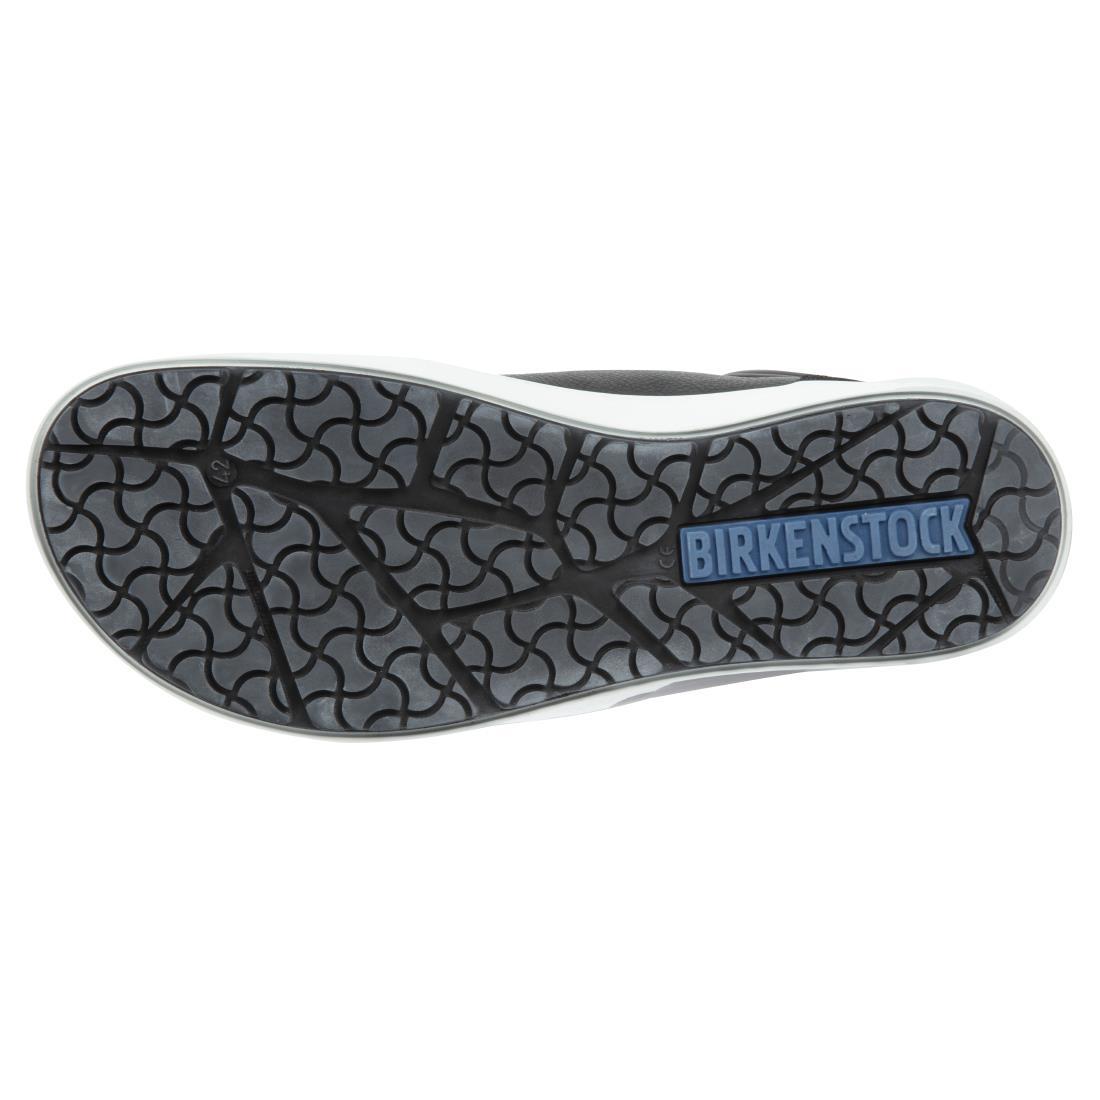 Birkenstock QS 700 Safety Boot Black 36